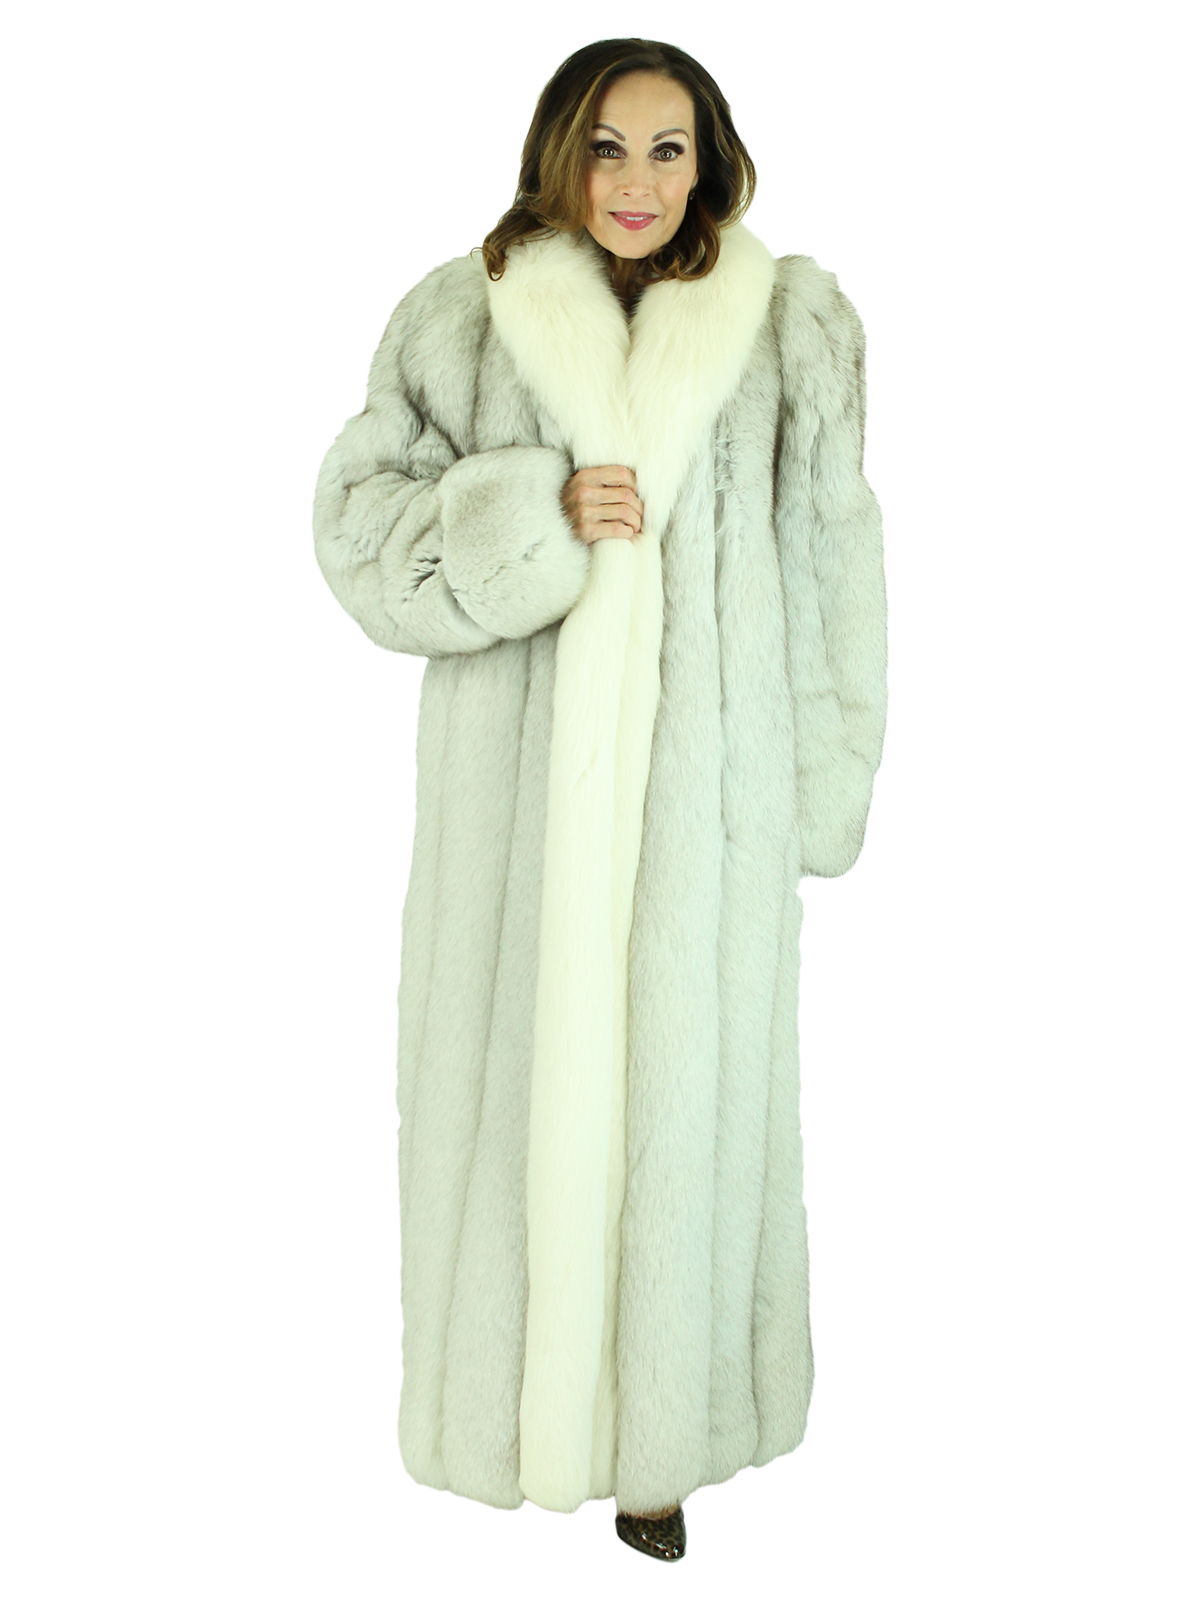 Blue Fox Fur Coat with Shadow Fox Trim - Women's Fur Coat - Large ...